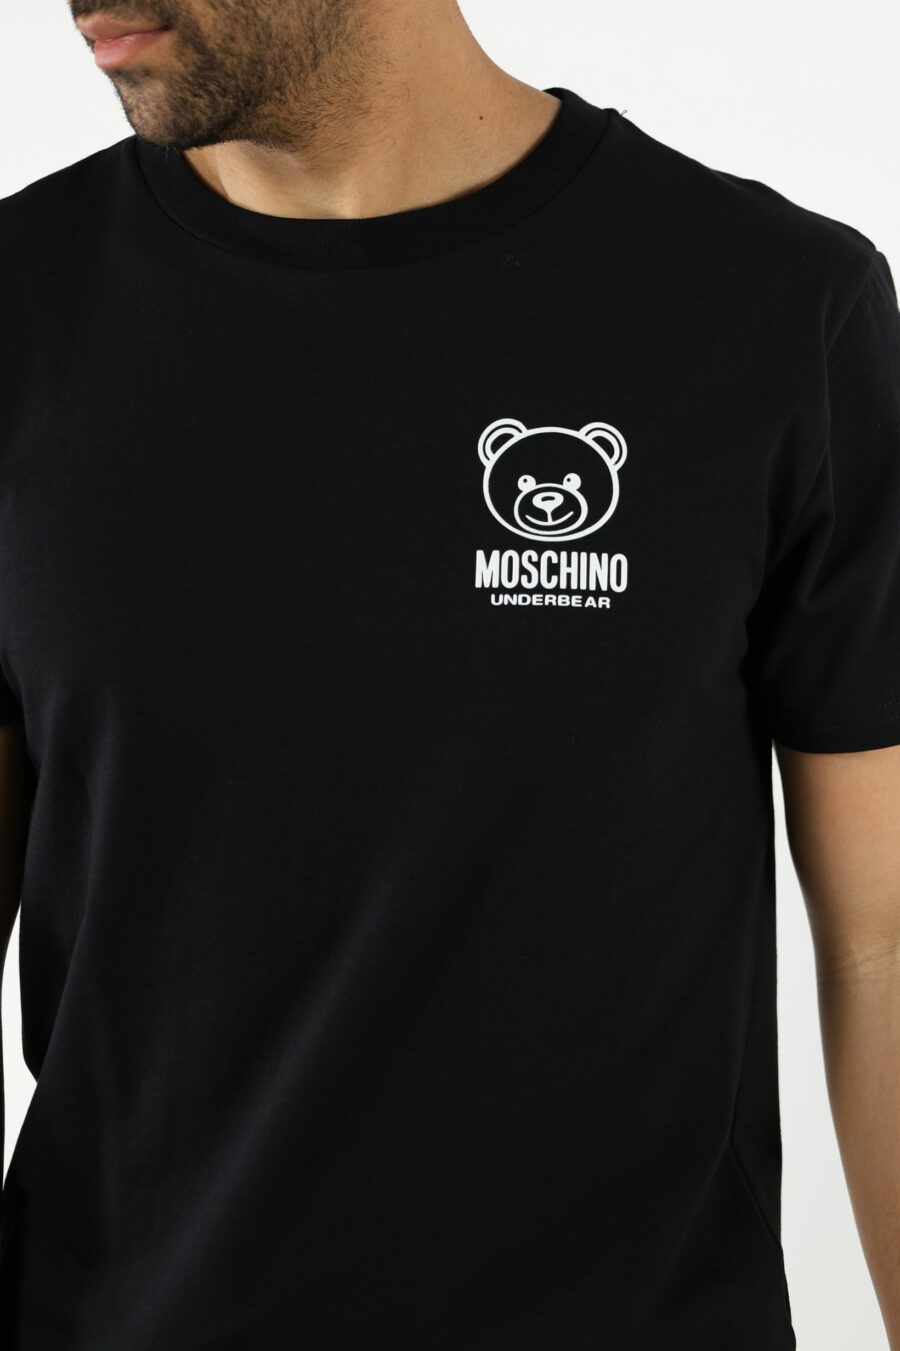 T-shirt black with mini-logo bear "underbear" in white rubber - 111015